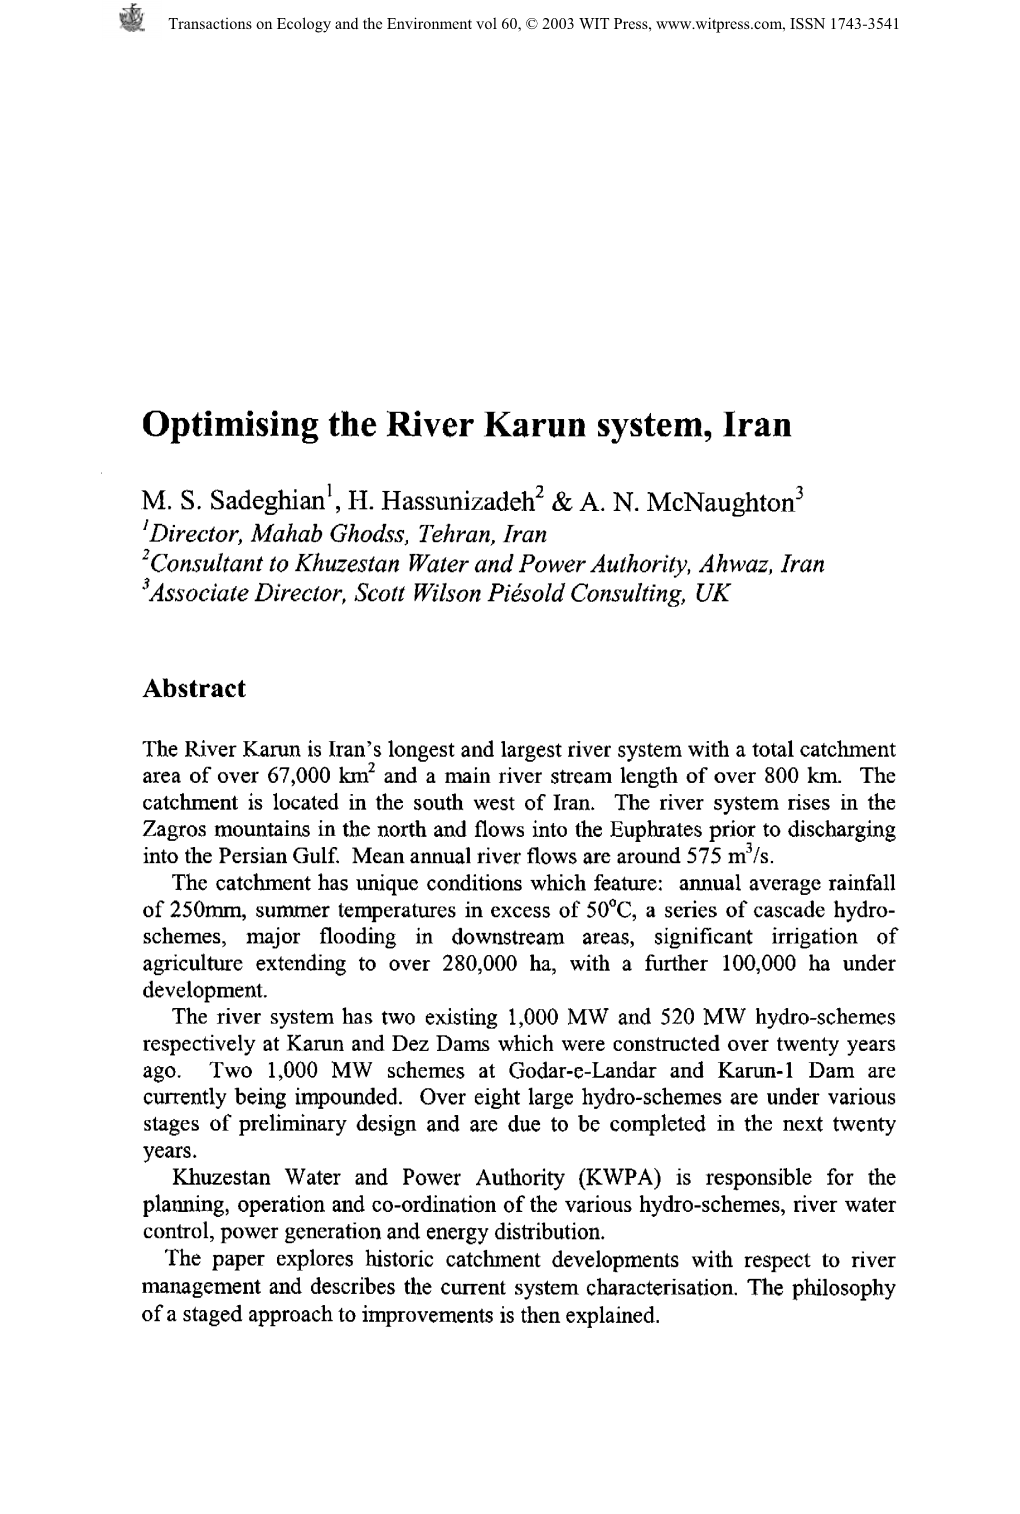 Optimising the River Karun System, Iran